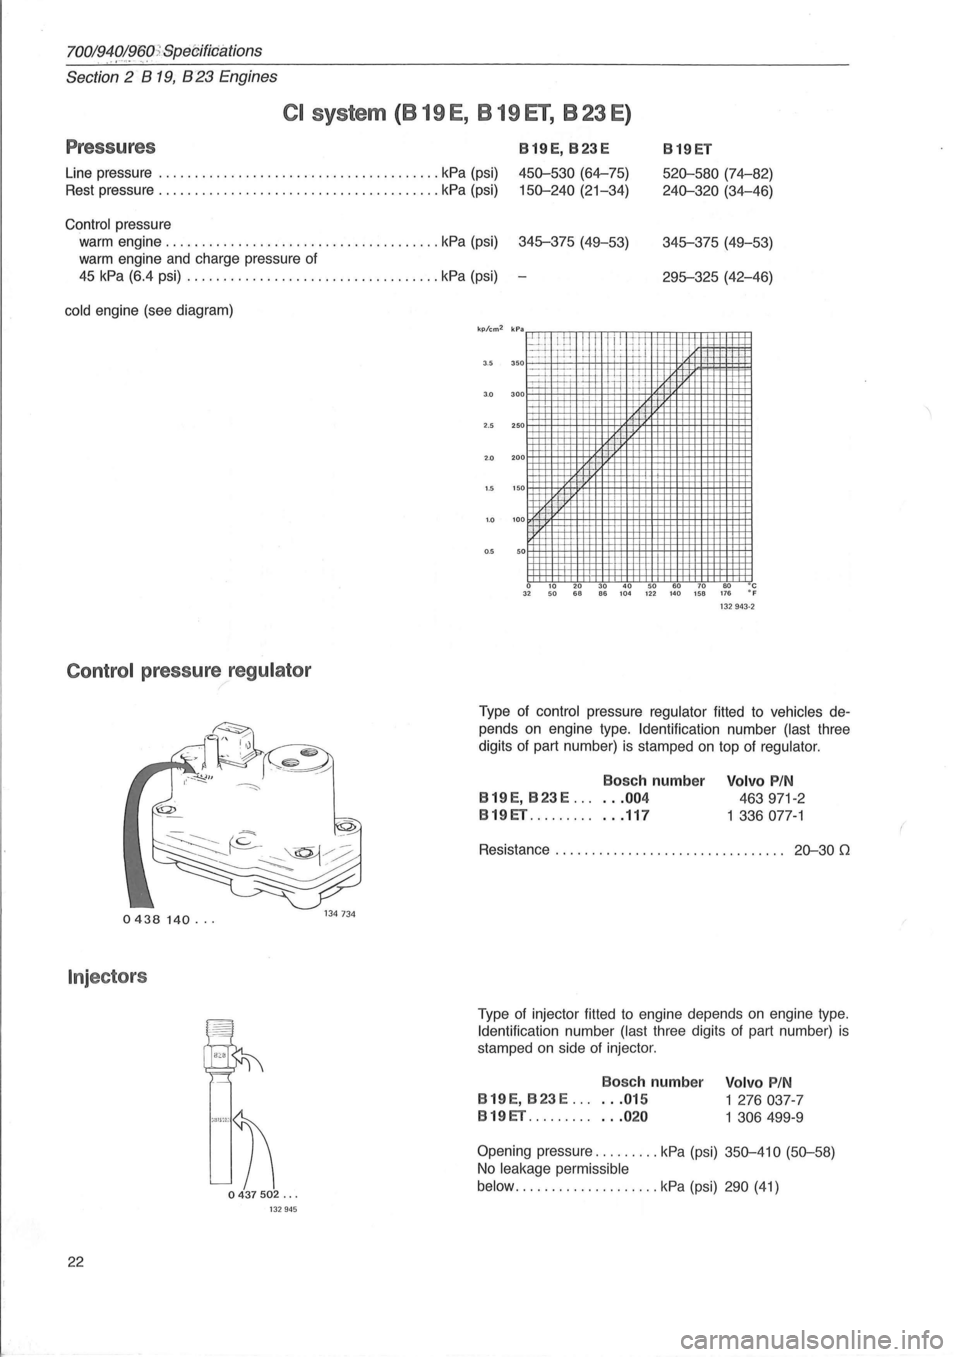 VOLVO 940 1982  Service Owners Manual 700/919!~o,(}).spe(jifiJjations 
Section 2 819, 823 Engines 
CI system (B  19  E, B  19 El, B  23  E) 
Pressures B19ET 
Line  pressure  ....................................... kPa (psi) 
B19E, B23 E 
